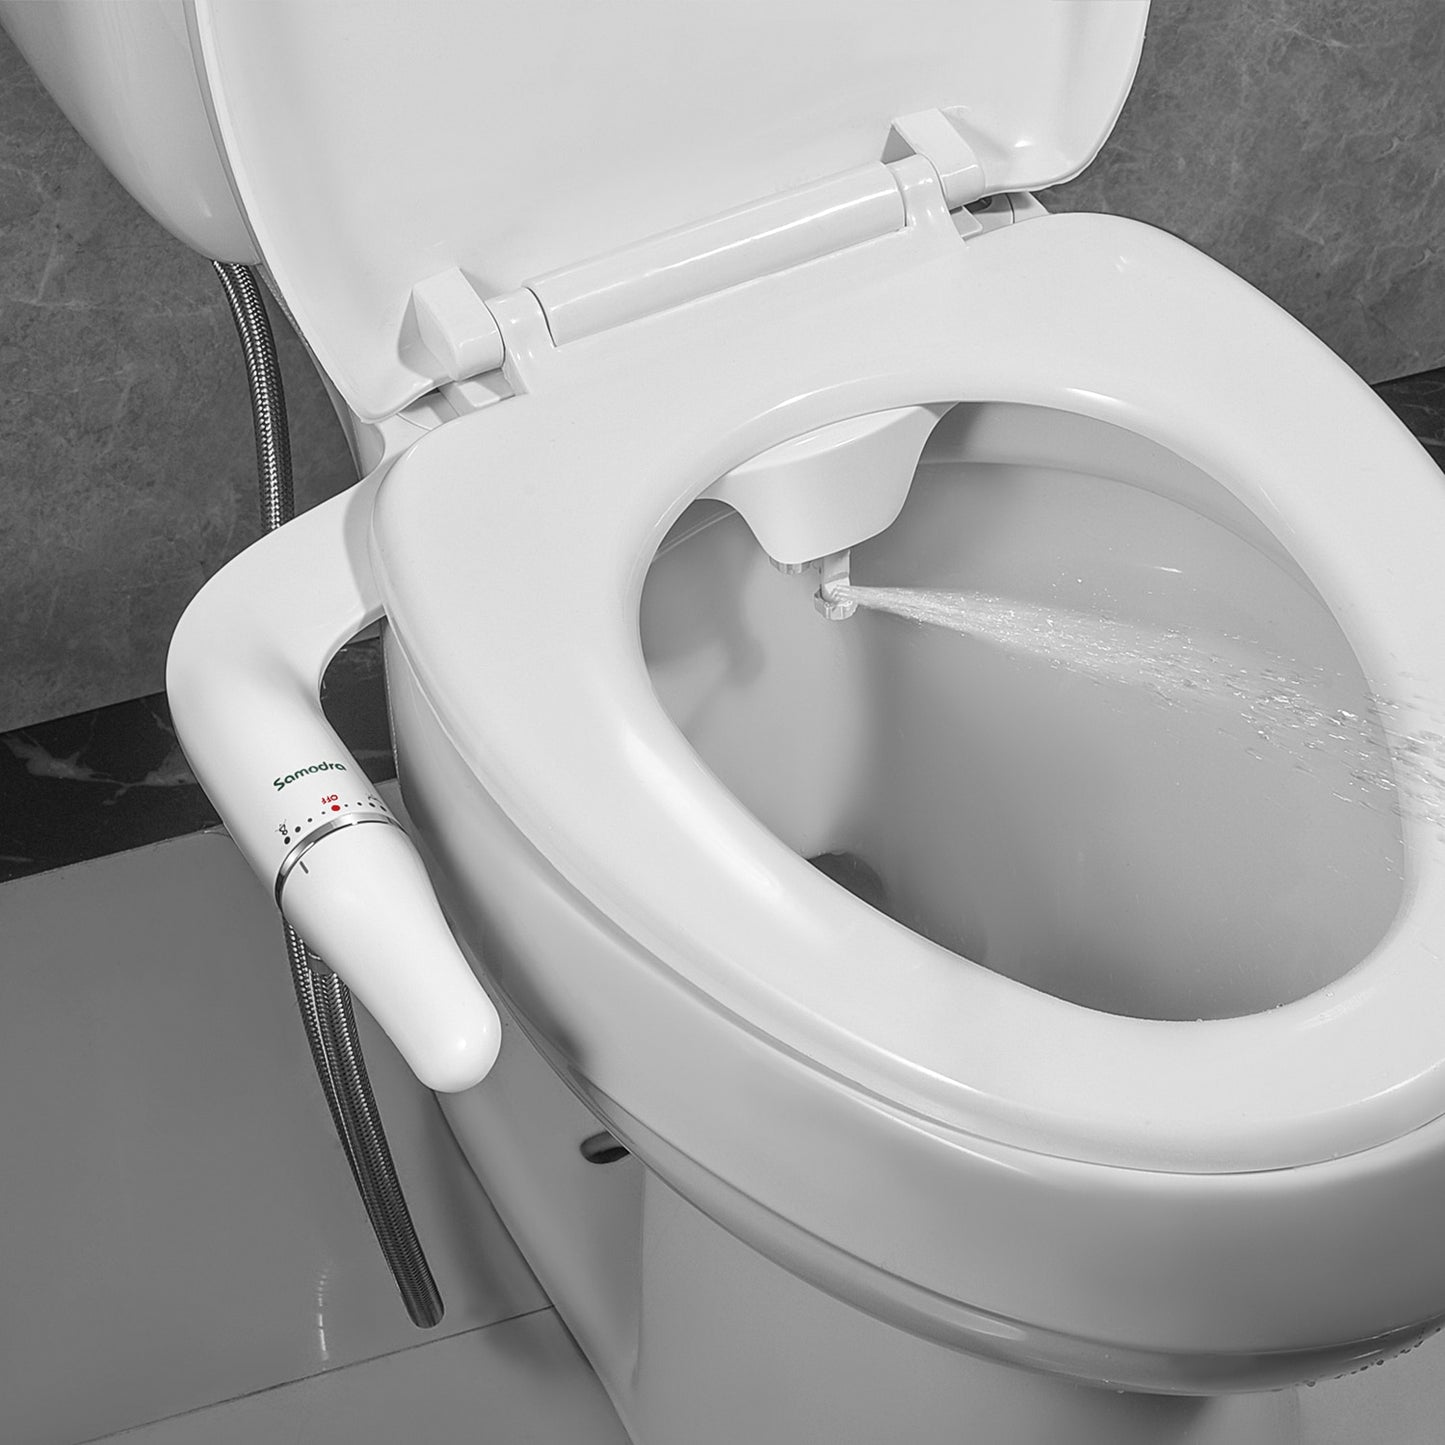 Bidet Toilet Seat Attachment With Brass Inlet Adjustable Water Pressure